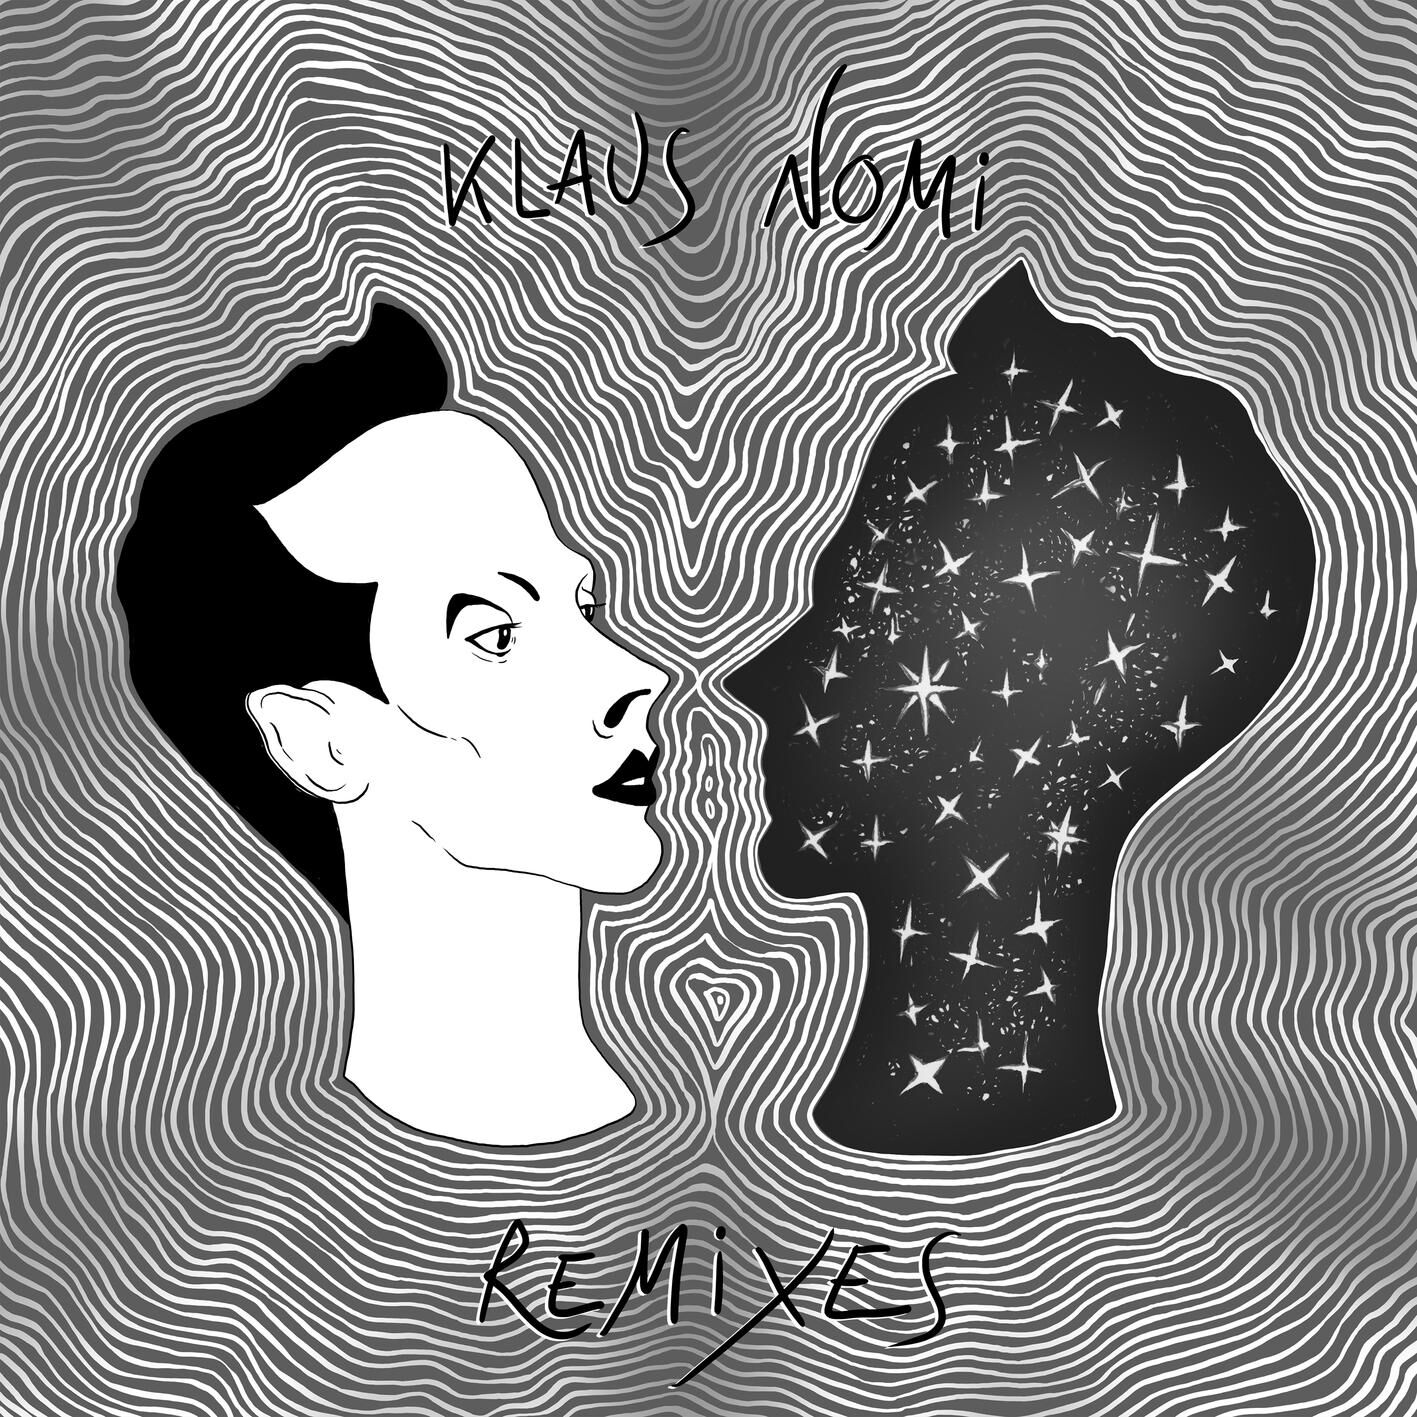 Klaus Nomi – Remixes